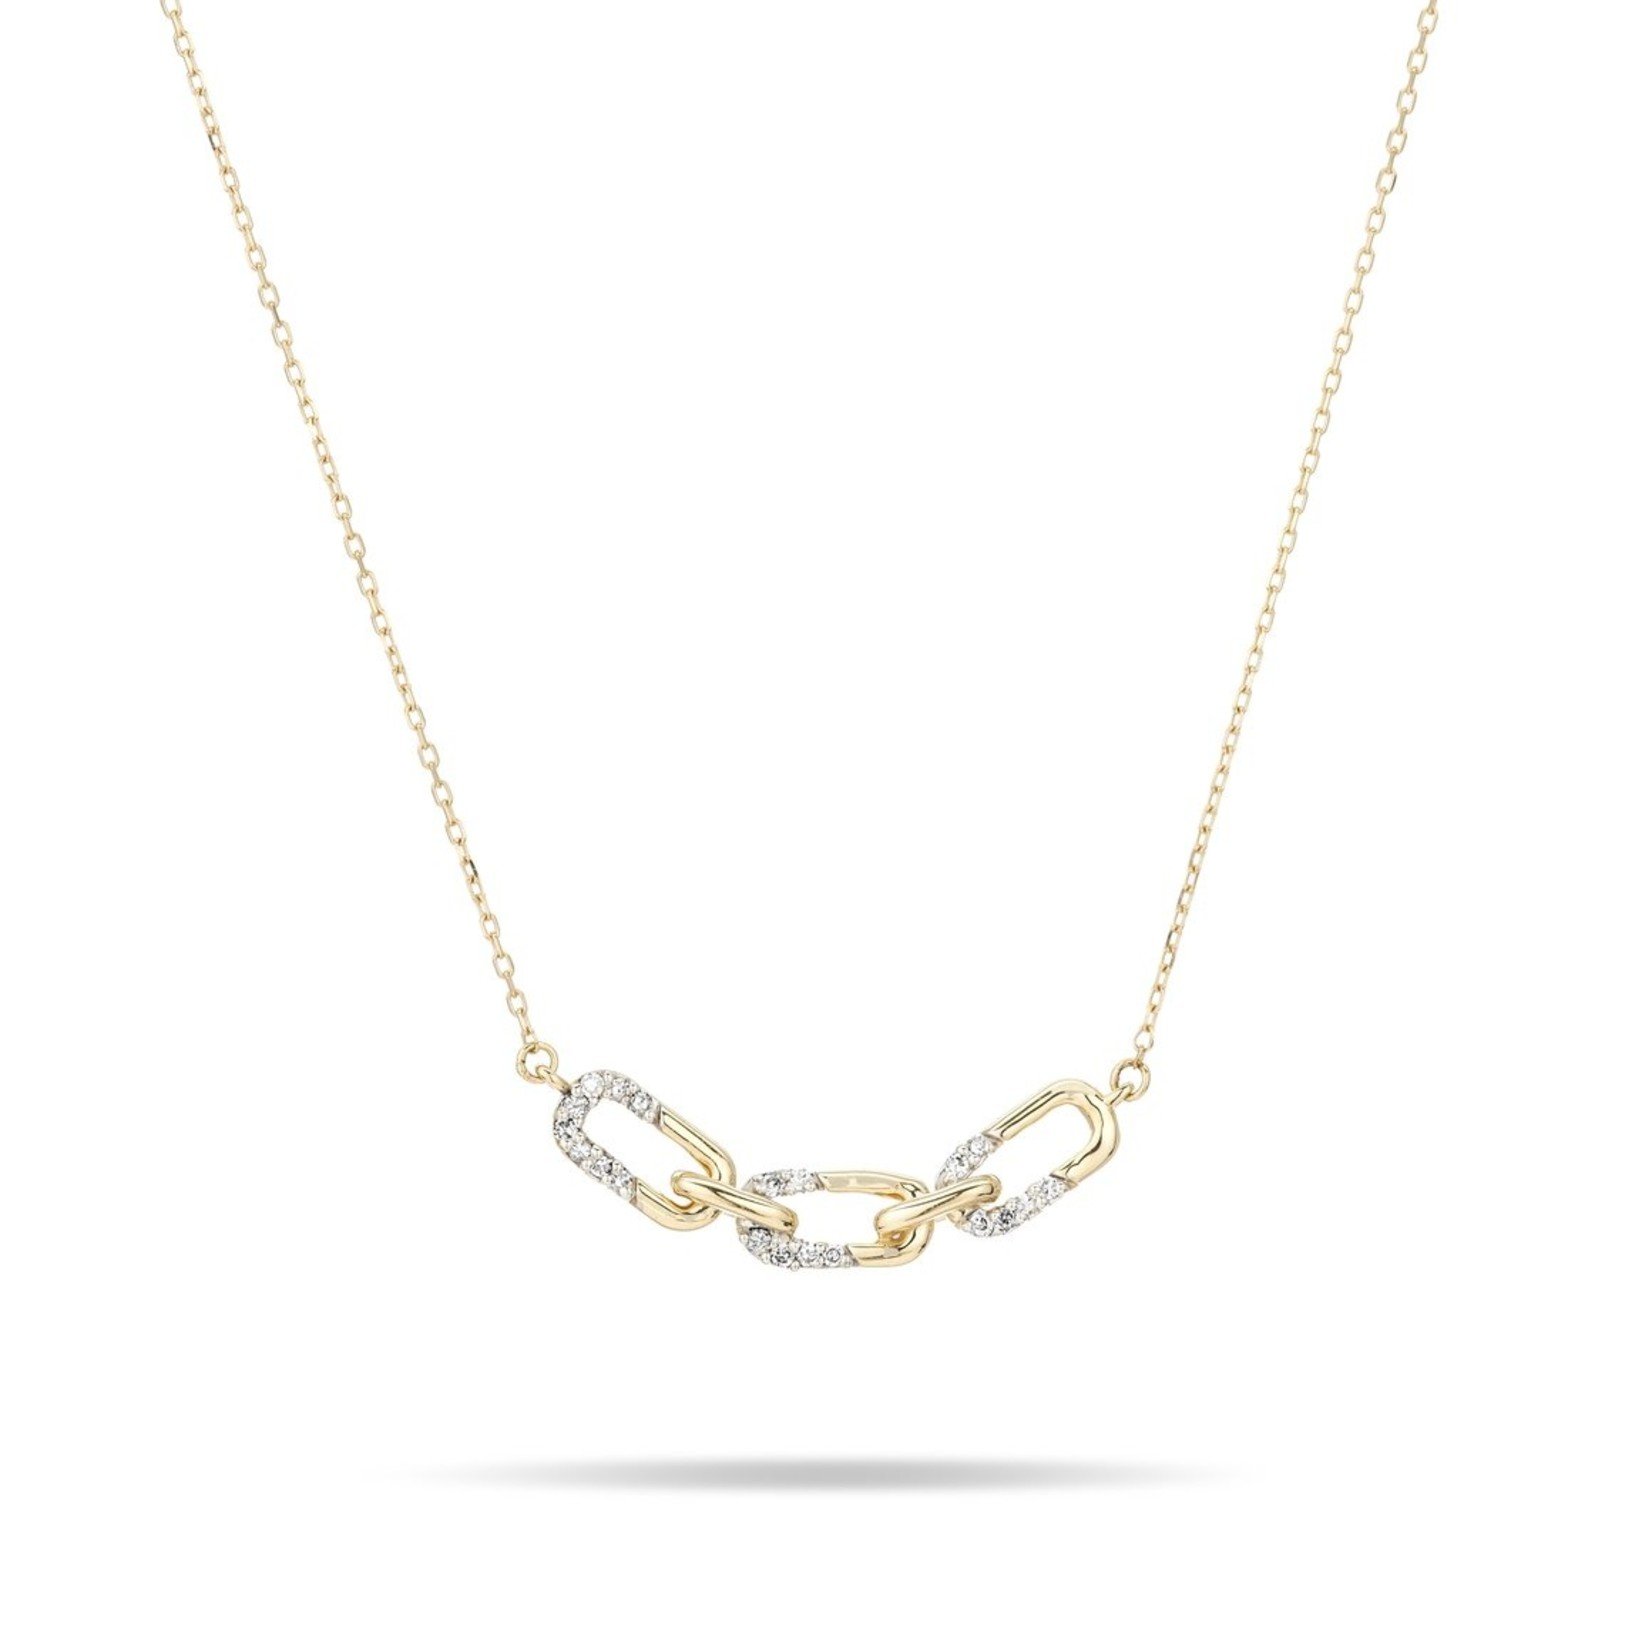 Pave Interlocking Link Curve Necklace - 14k and .06 carat